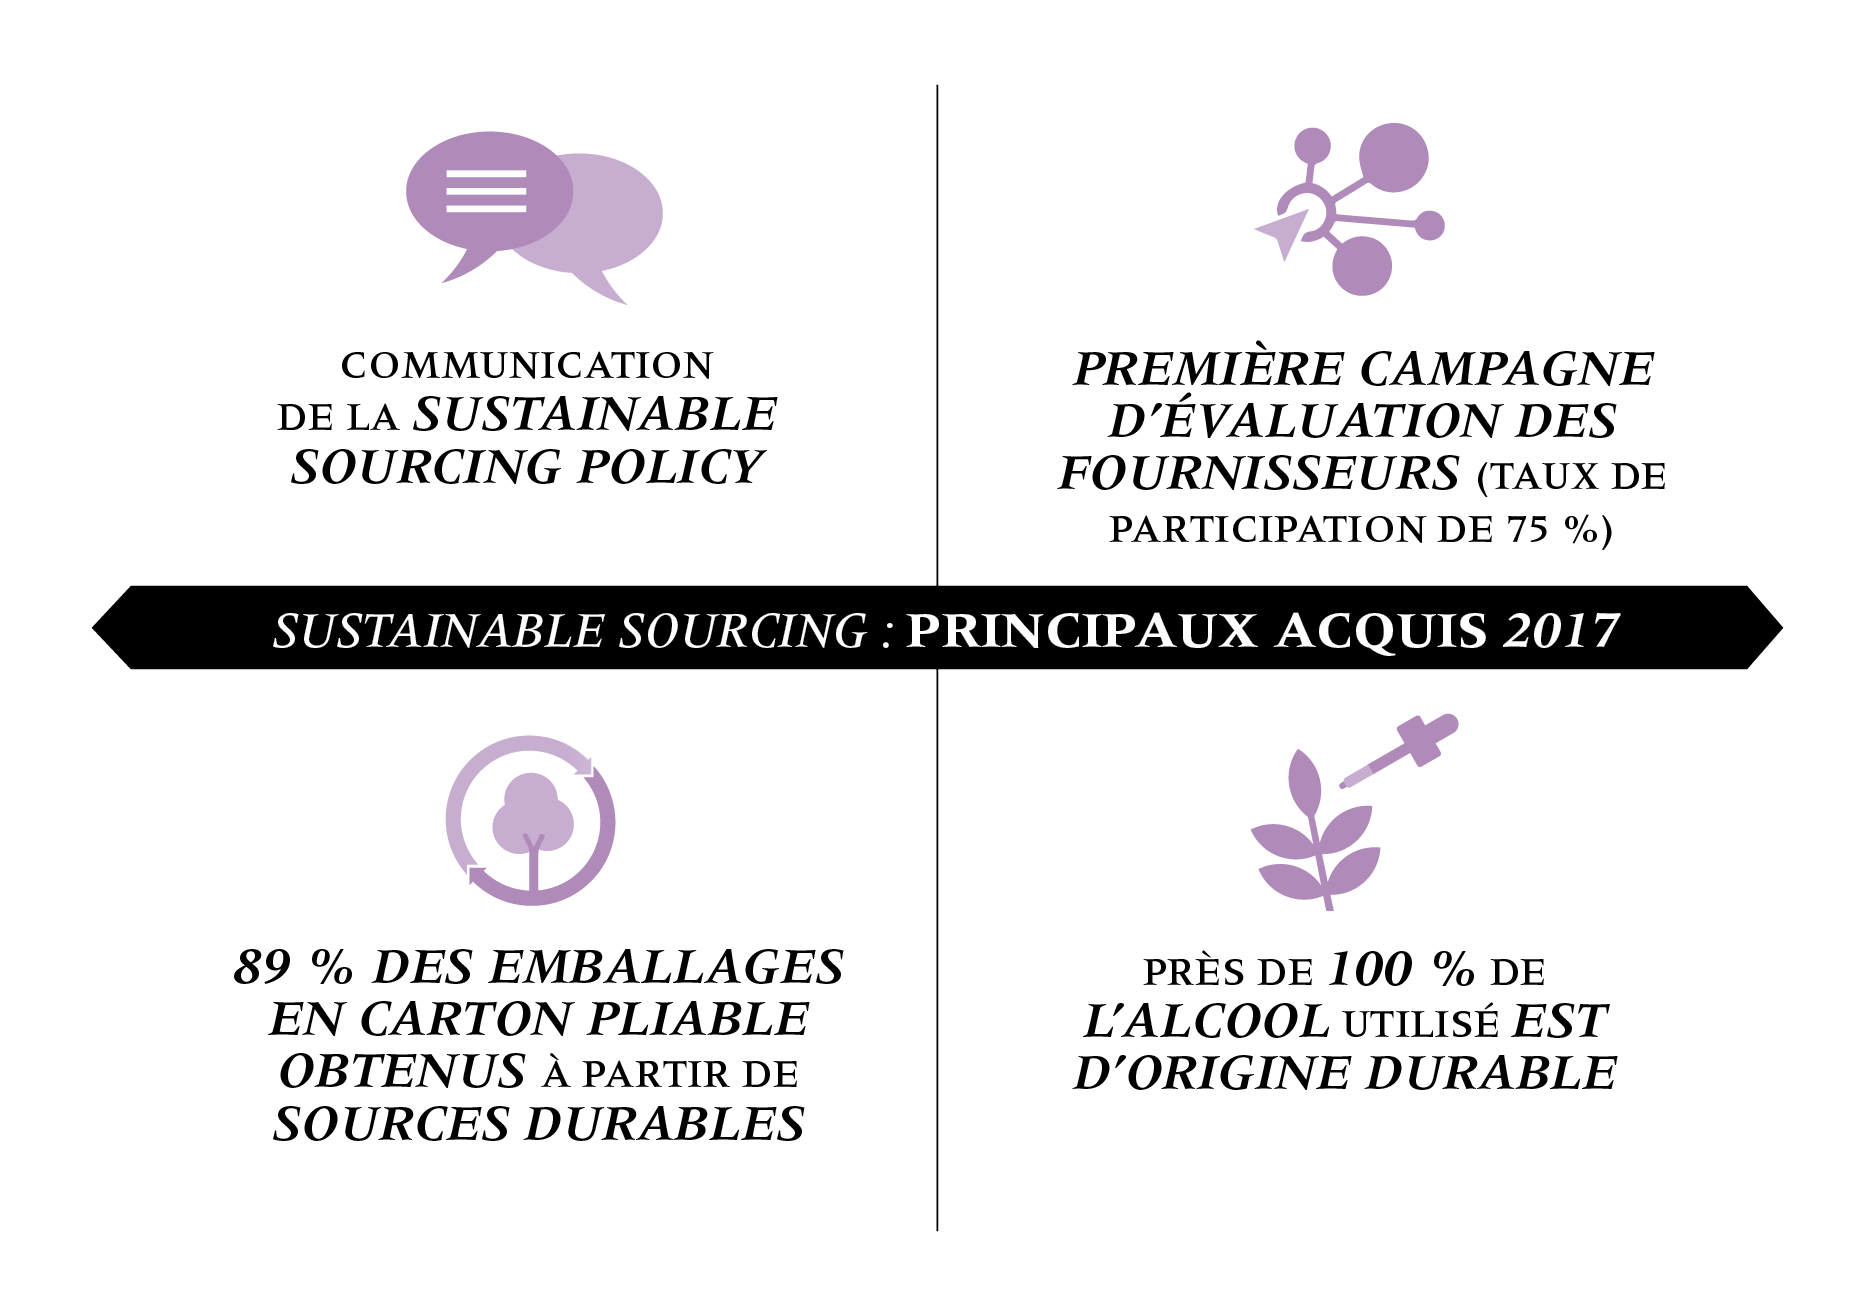 Sustainable sourcing : principaux acquis 2017